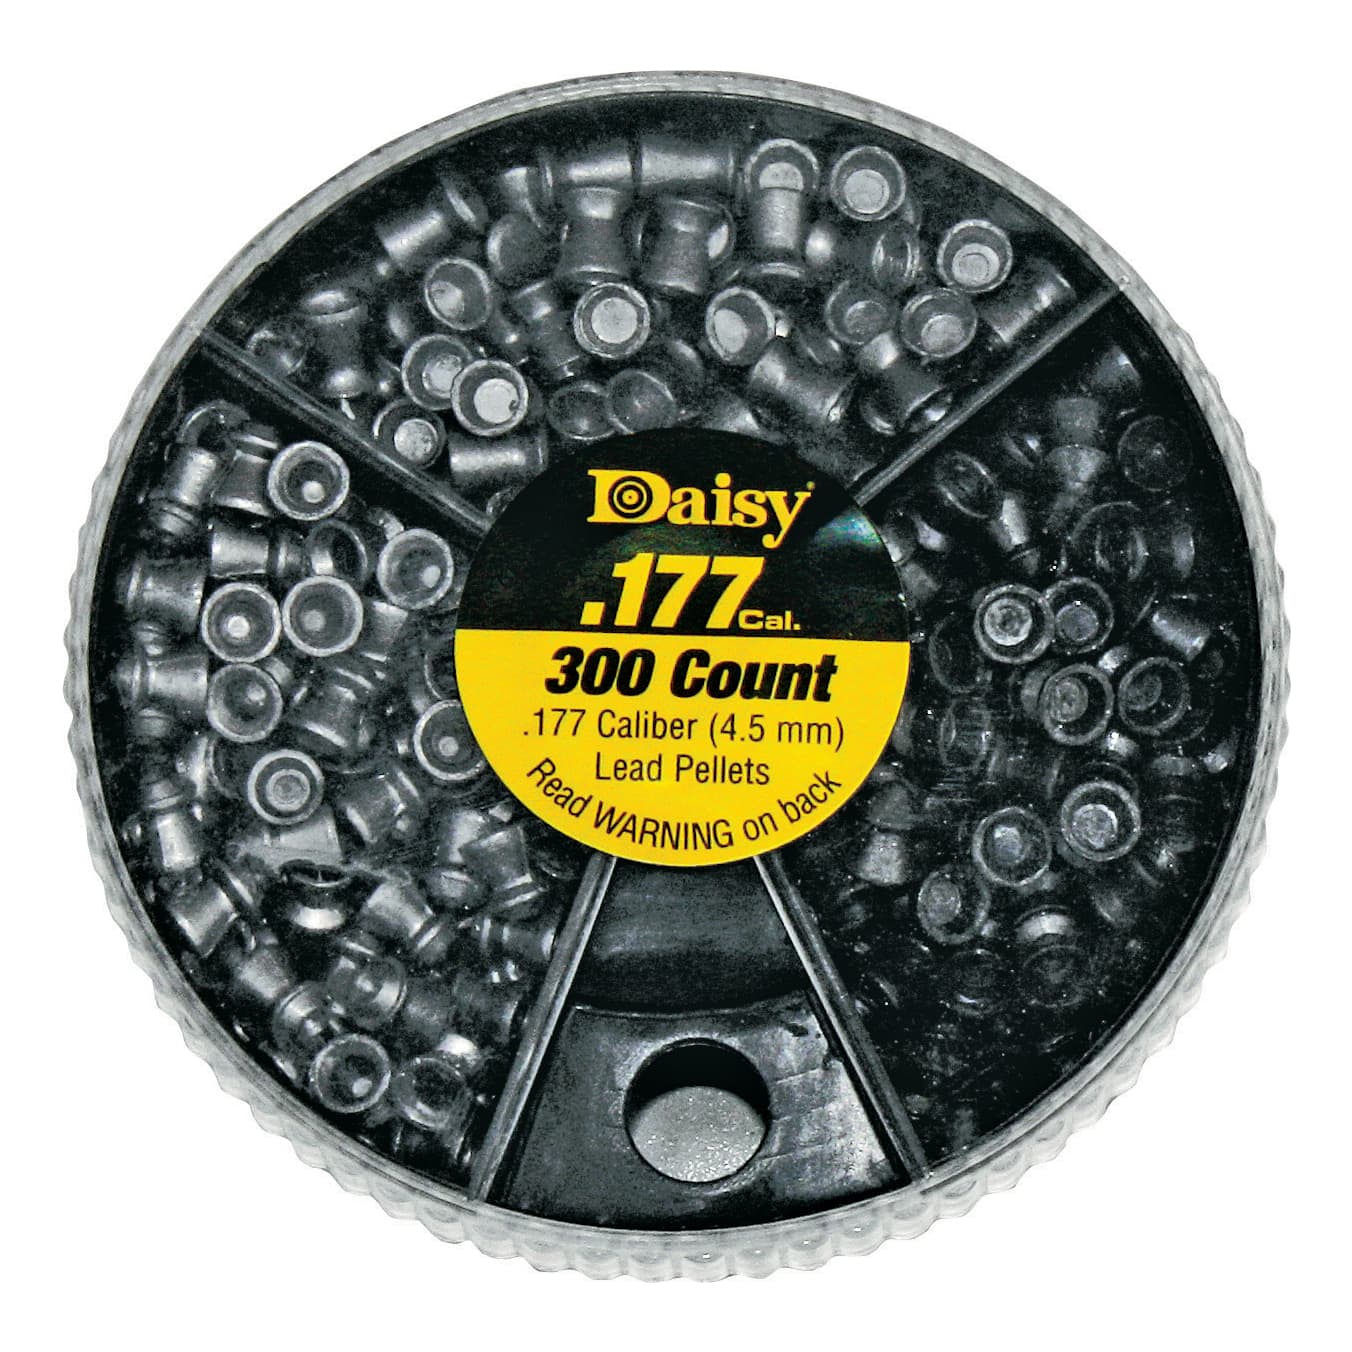 Daisy® Dial-A-Pellet